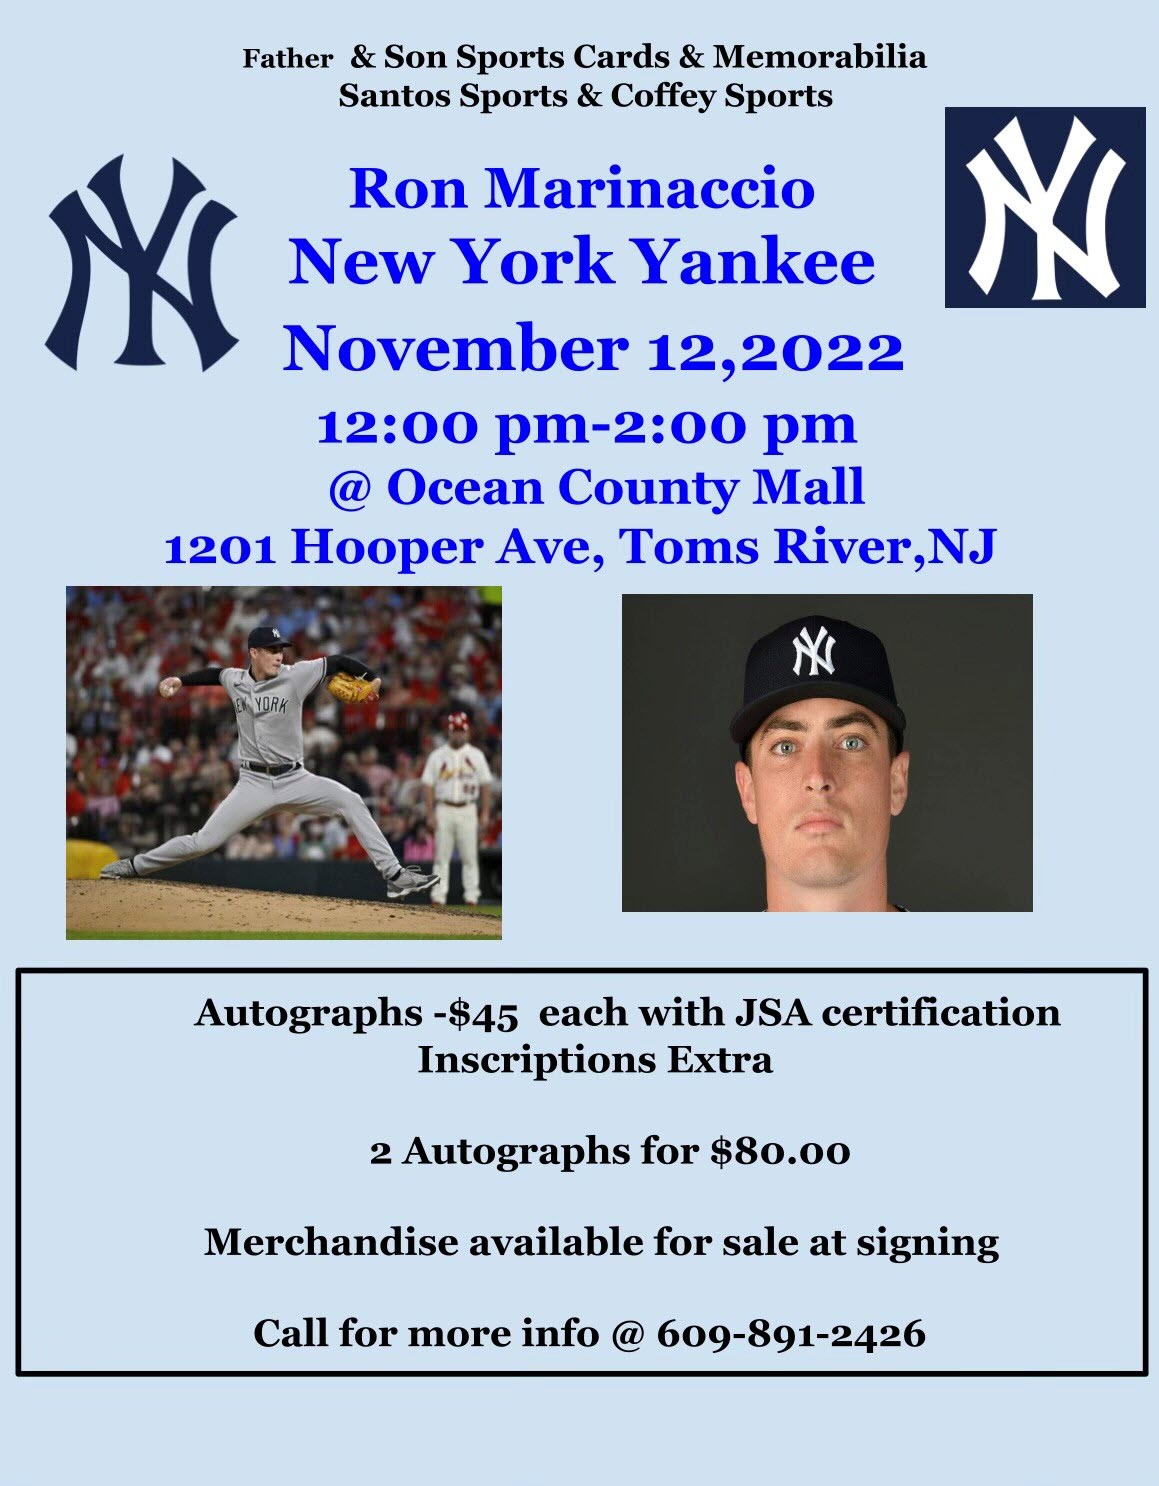 NY Yankee Ron Marinaccio will be in Toms River 